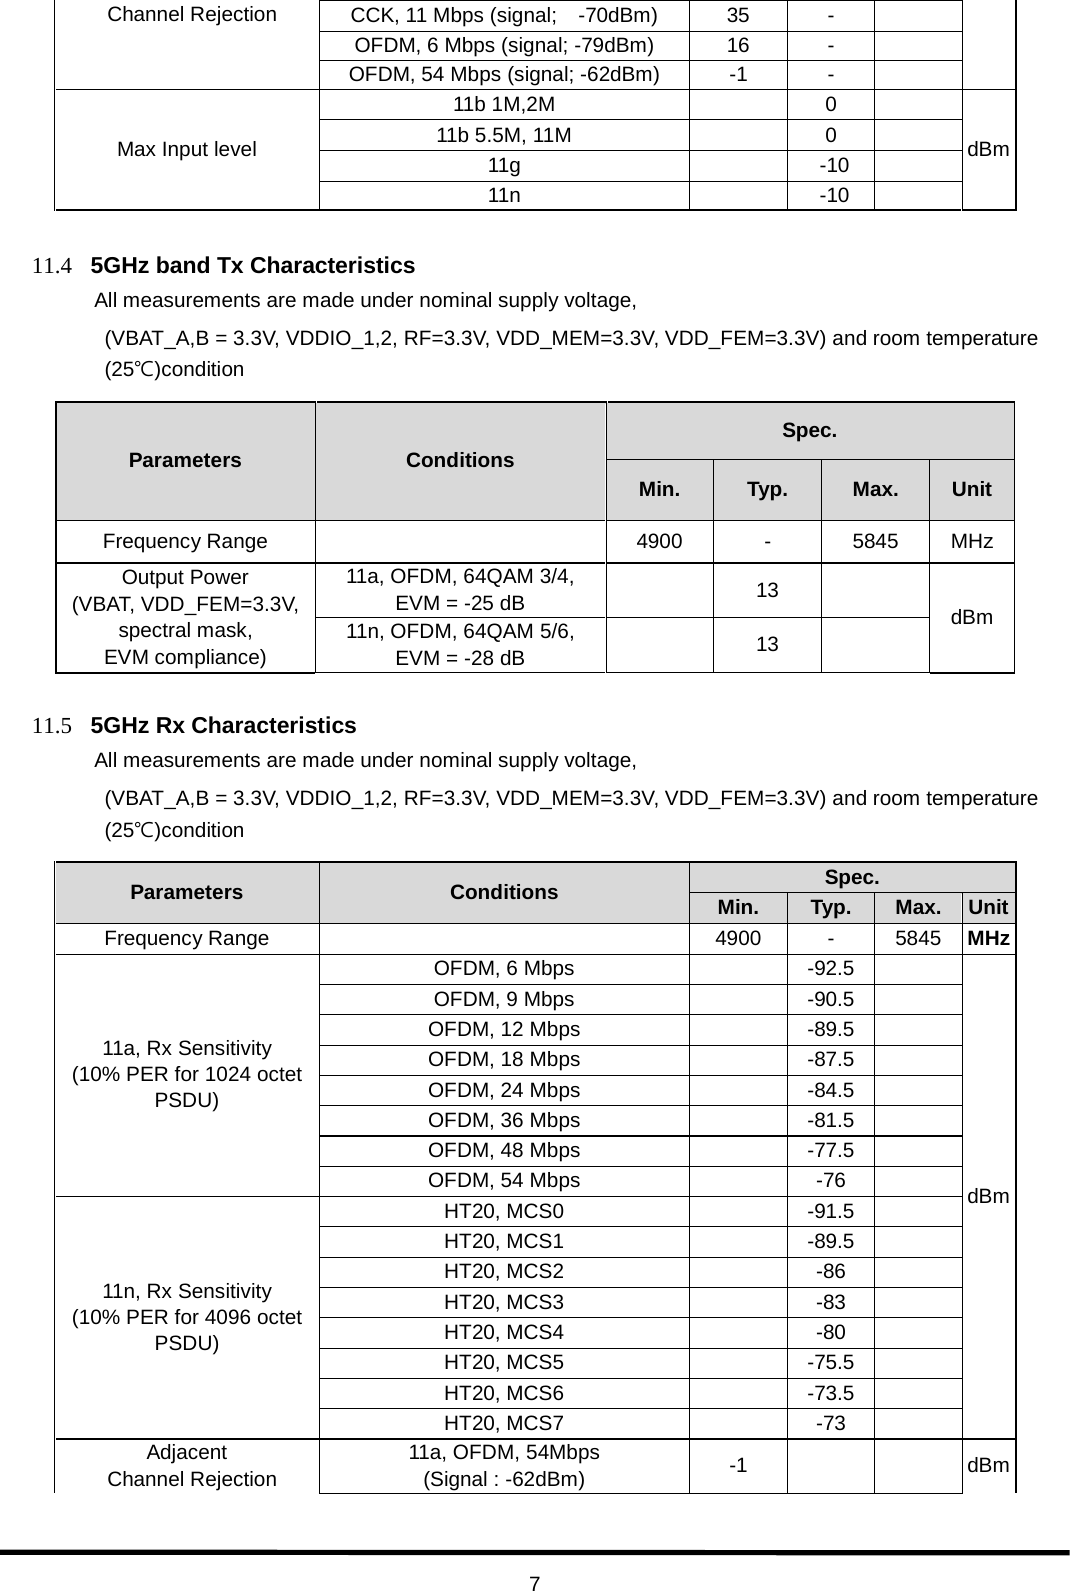  7   Channel Rejection CCK, 11 Mbps (signal;    -70dBm) 35 -  OFDM, 6 Mbps (signal; -79dBm) 16 -  OFDM, 54 Mbps (signal; -62dBm) -1 -  Max Input level 11b 1M,2M  0  dBm 11b 5.5M, 11M  0  11g  -10  11n  -10   11.4 5GHz band Tx Characteristics All measurements are made under nominal supply voltage,   (VBAT_A,B = 3.3V, VDDIO_1,2, RF=3.3V, VDD_MEM=3.3V, VDD_FEM=3.3V) and room temperature     (25℃)condition Parameters Conditions Spec. Min. Typ. Max. Unit Frequency Range  4900  -  5845  MHz Output Power (VBAT, VDD_FEM=3.3V, spectral mask, EVM compliance) 11a, OFDM, 64QAM 3/4,   EVM = -25 dB  13  dBm 11n, OFDM, 64QAM 5/6,   EVM = -28 dB  13   11.5 5GHz Rx Characteristics All measurements are made under nominal supply voltage,   (VBAT_A,B = 3.3V, VDDIO_1,2, RF=3.3V, VDD_MEM=3.3V, VDD_FEM=3.3V) and room temperature (25℃)condition Parameters Conditions Spec. Min. Typ. Max. Unit Frequency Range  4900 - 5845 MHz 11a, Rx Sensitivity (10% PER for 1024 octet PSDU) OFDM, 6 Mbps  -92.5  dBm OFDM, 9 Mbps  -90.5  OFDM, 12 Mbps  -89.5  OFDM, 18 Mbps  -87.5  OFDM, 24 Mbps  -84.5  OFDM, 36 Mbps  -81.5  OFDM, 48 Mbps  -77.5  OFDM, 54 Mbps  -76  11n, Rx Sensitivity (10% PER for 4096 octet PSDU) HT20, MCS0  -91.5  HT20, MCS1  -89.5  HT20, MCS2  -86  HT20, MCS3  -83  HT20, MCS4  -80  HT20, MCS5  -75.5  HT20, MCS6  -73.5  HT20, MCS7  -73  Adjacent  Channel Rejection 11a, OFDM, 54Mbps (Signal : -62dBm) -1   dBm 